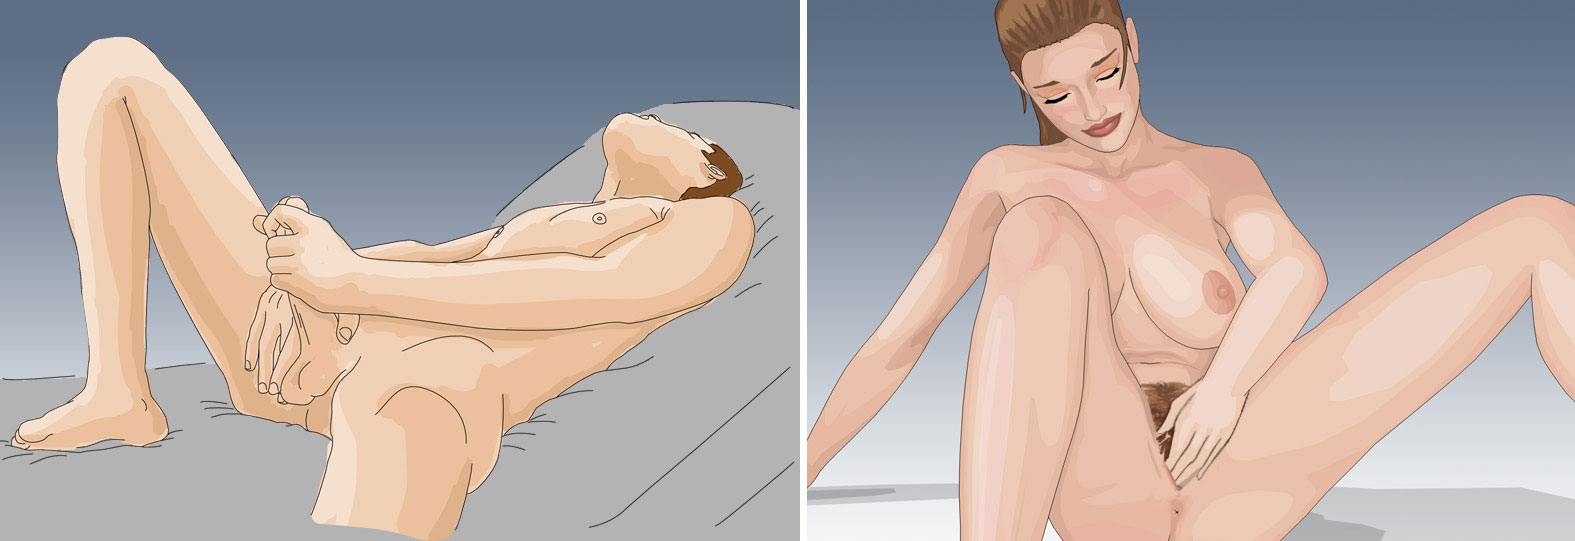 How To Male Masturbation 116